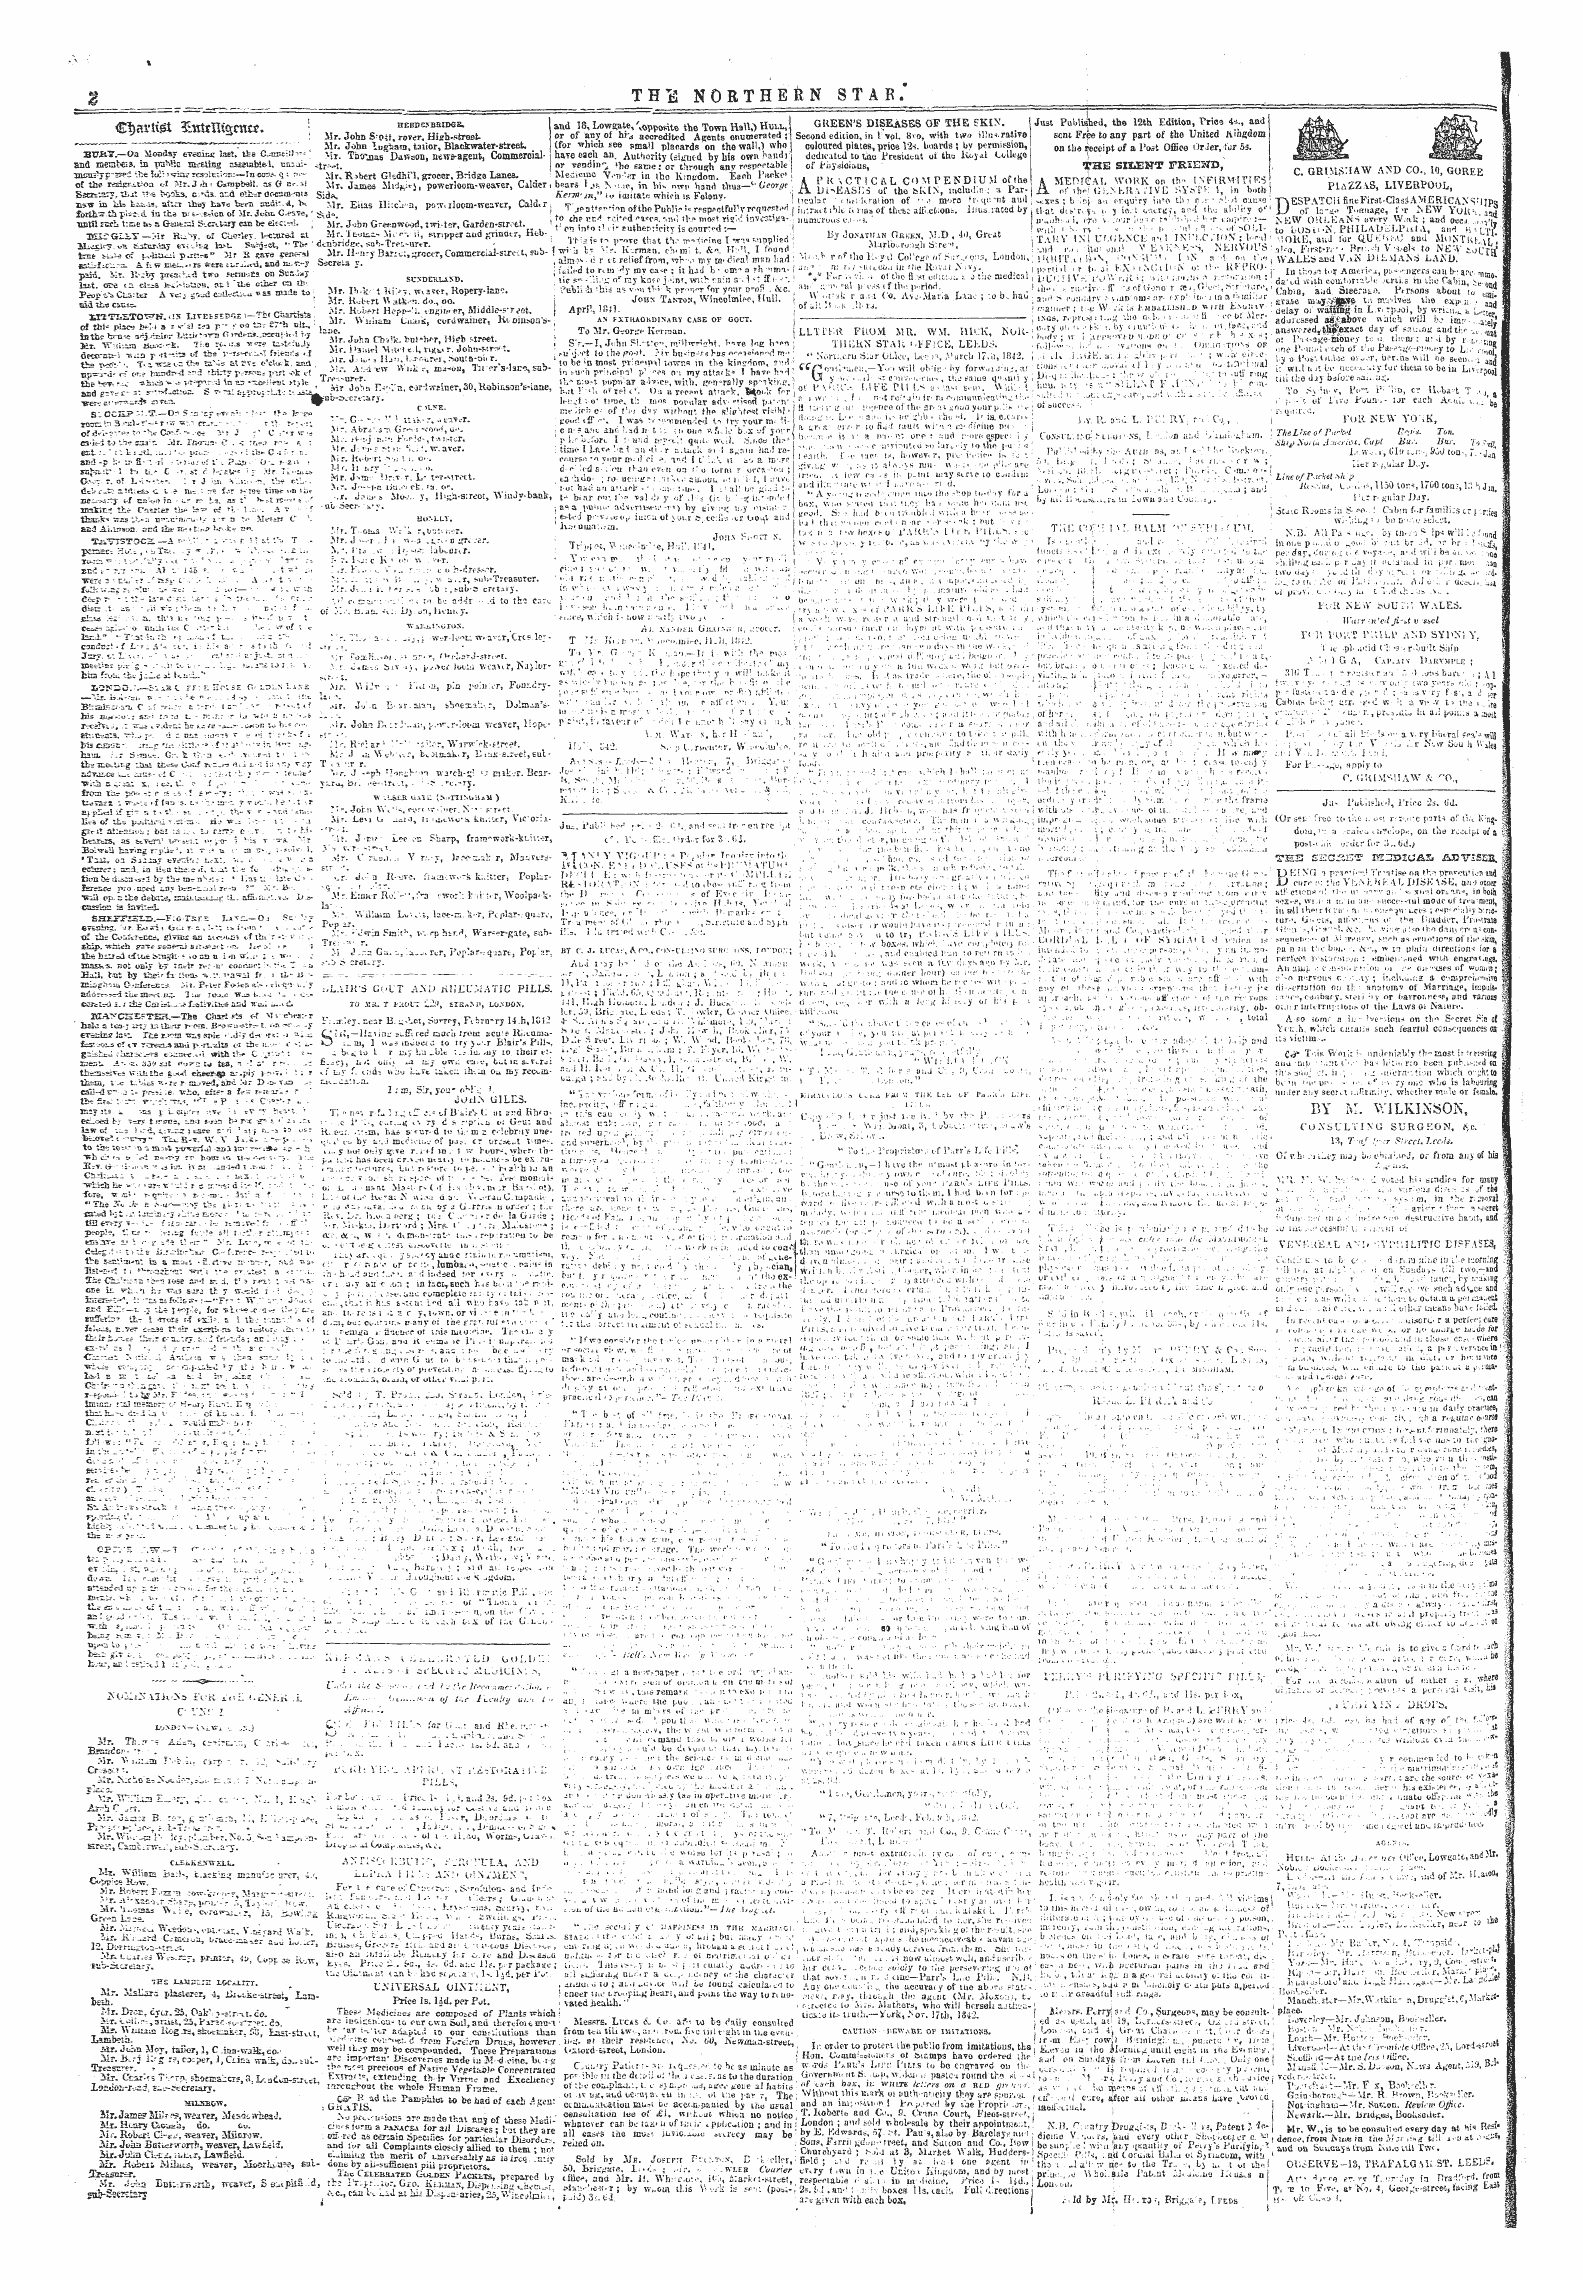 Northern Star (1837-1852): jS F Y, 5th edition - Ad00224